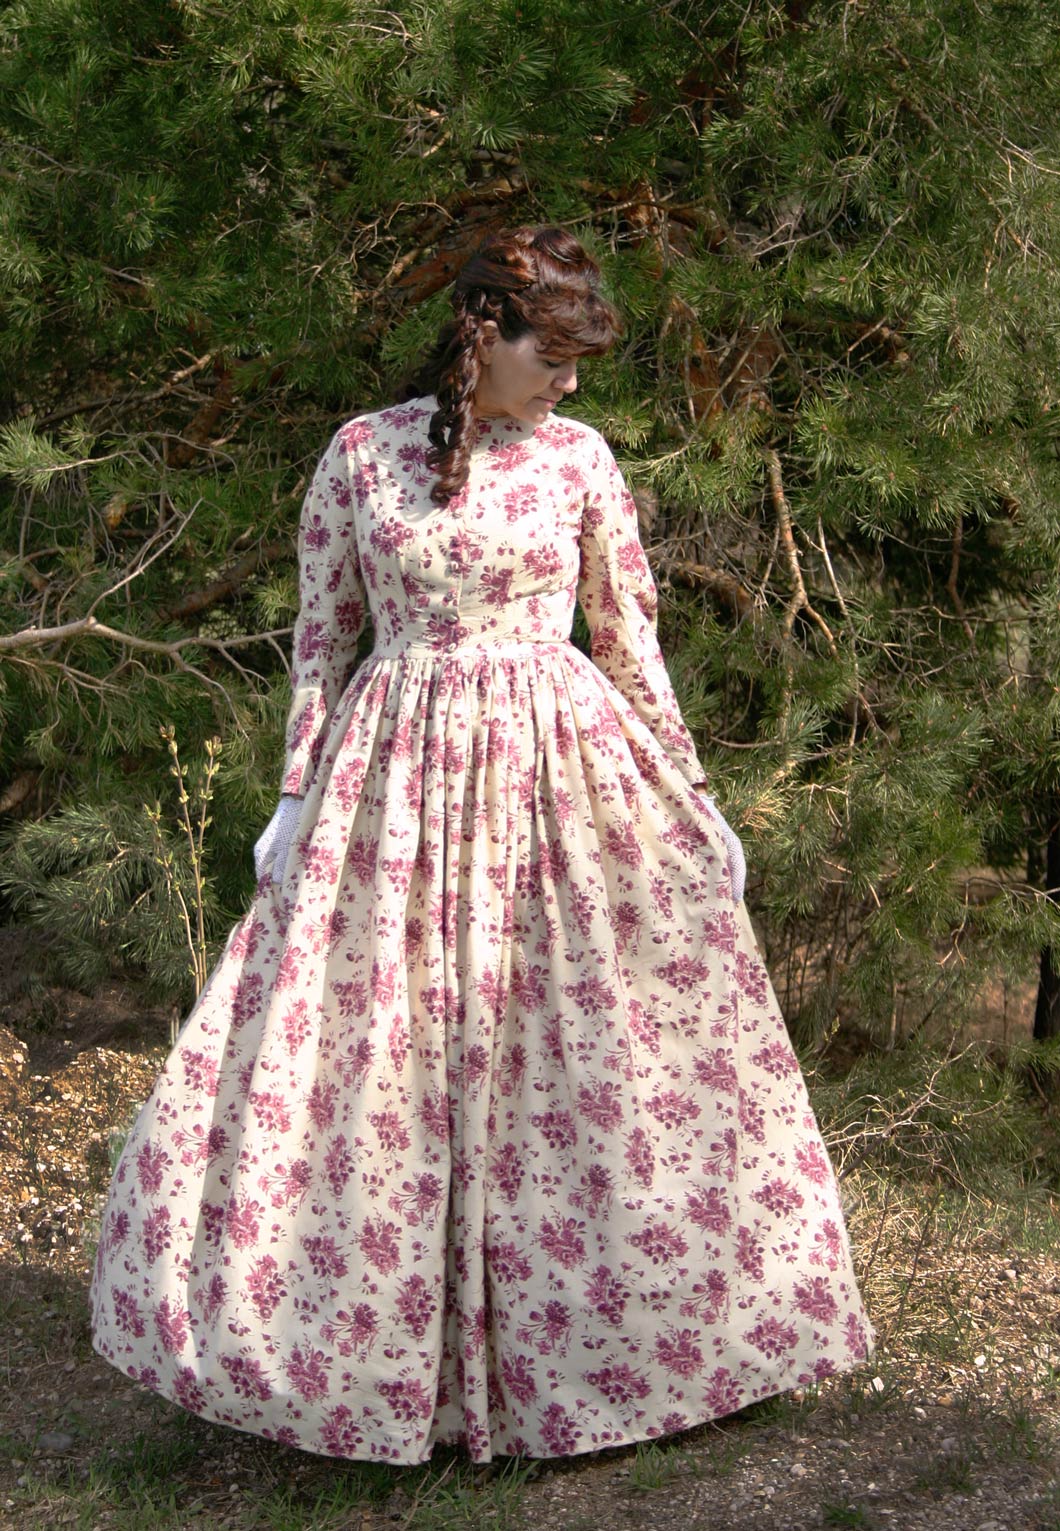 EARRINGS JEWELRY LADY VICTORIAN CLOTHING WOMEN Civil War reenactor sass Dress 